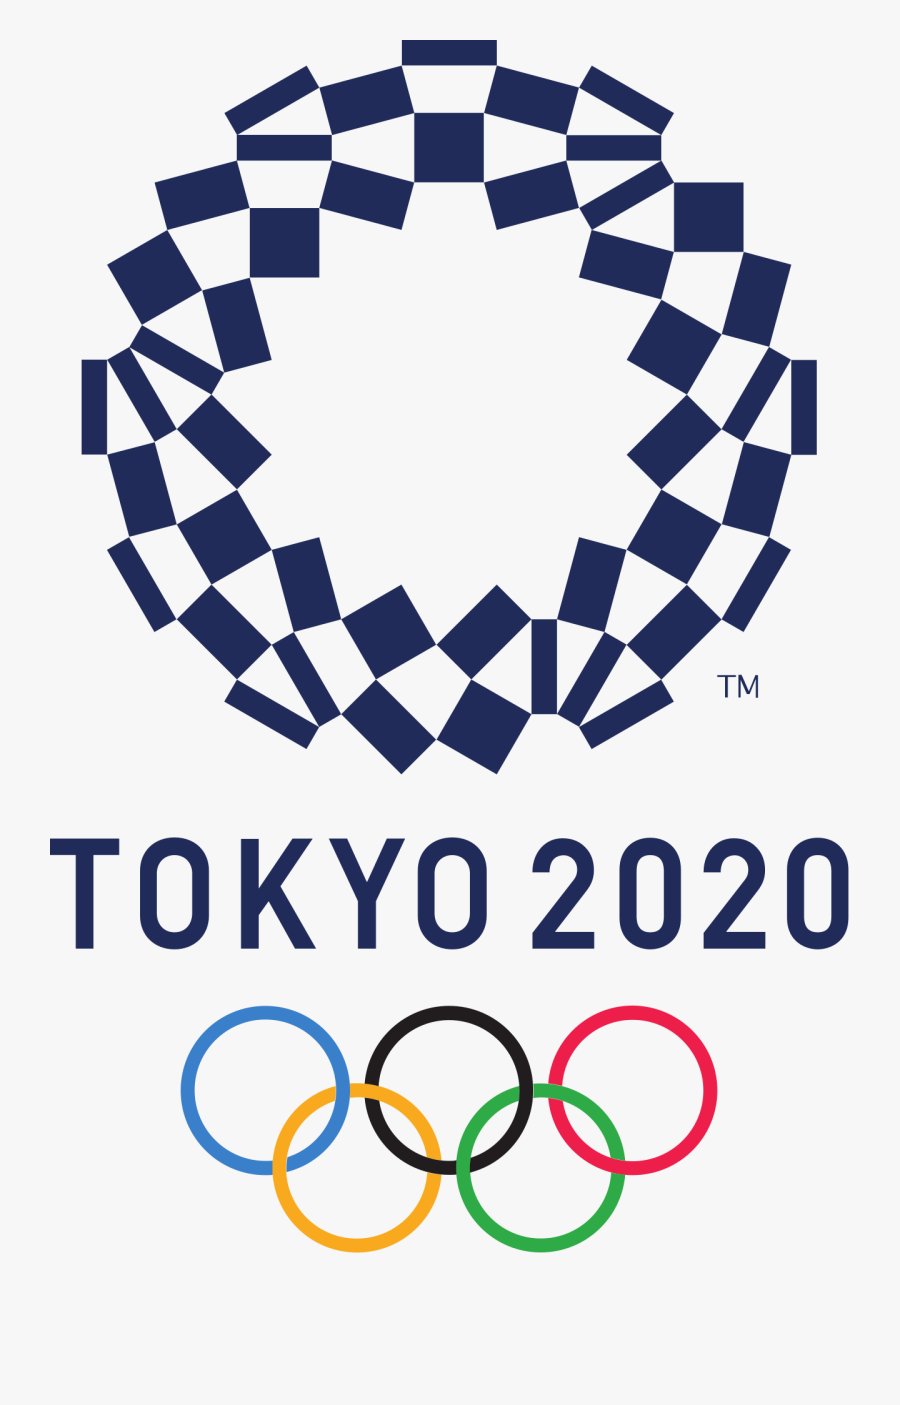 Tokyo 2020 Logo Png, Transparent Clipart